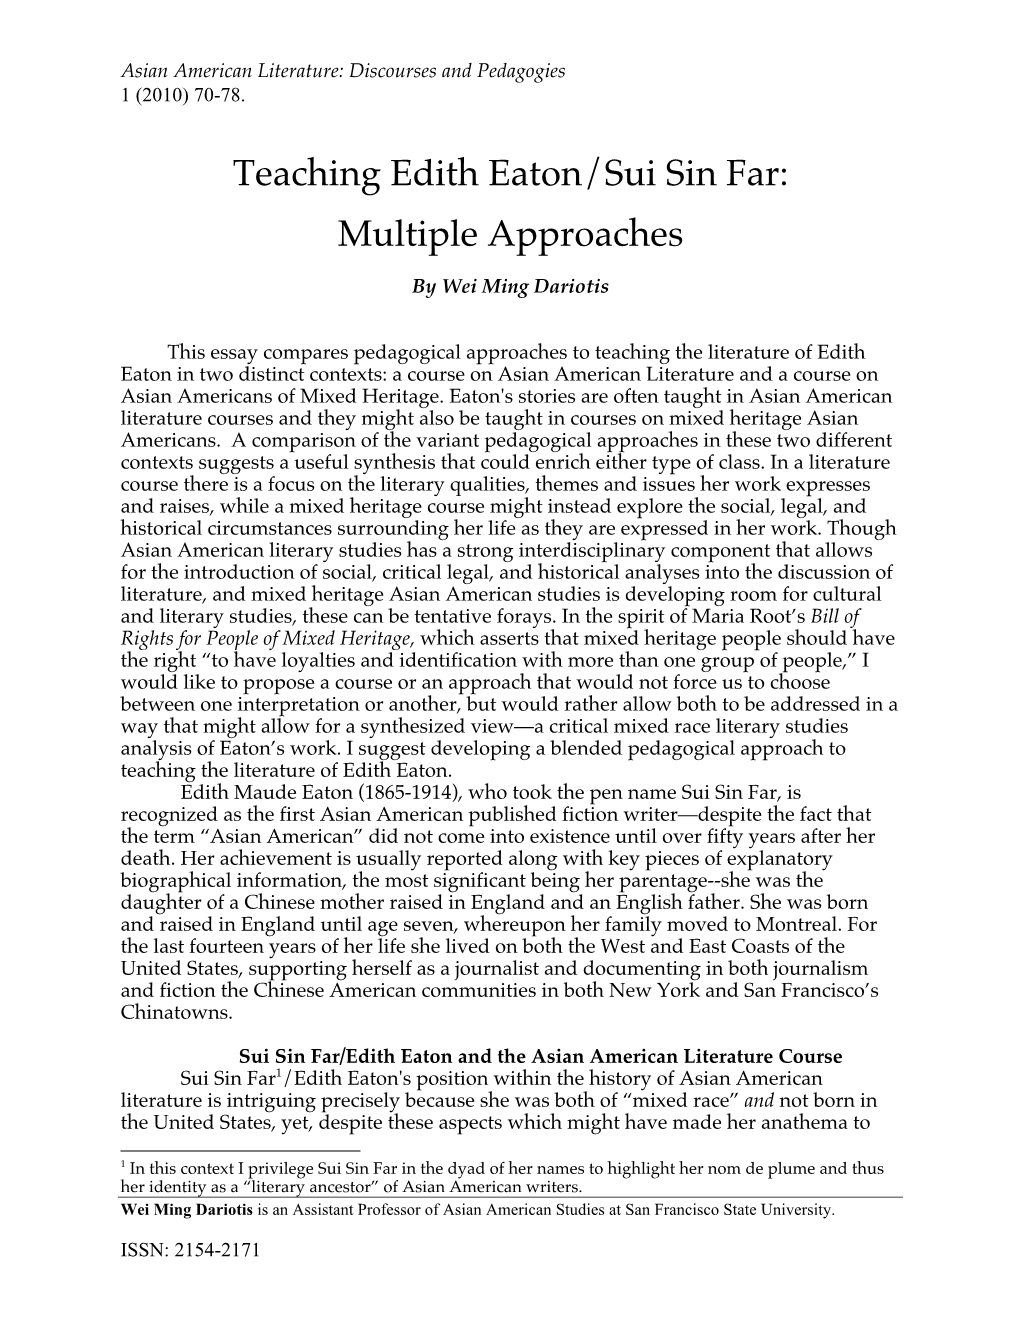 Teaching Edith Eaton/Sui Sin Far: Multiple Approaches